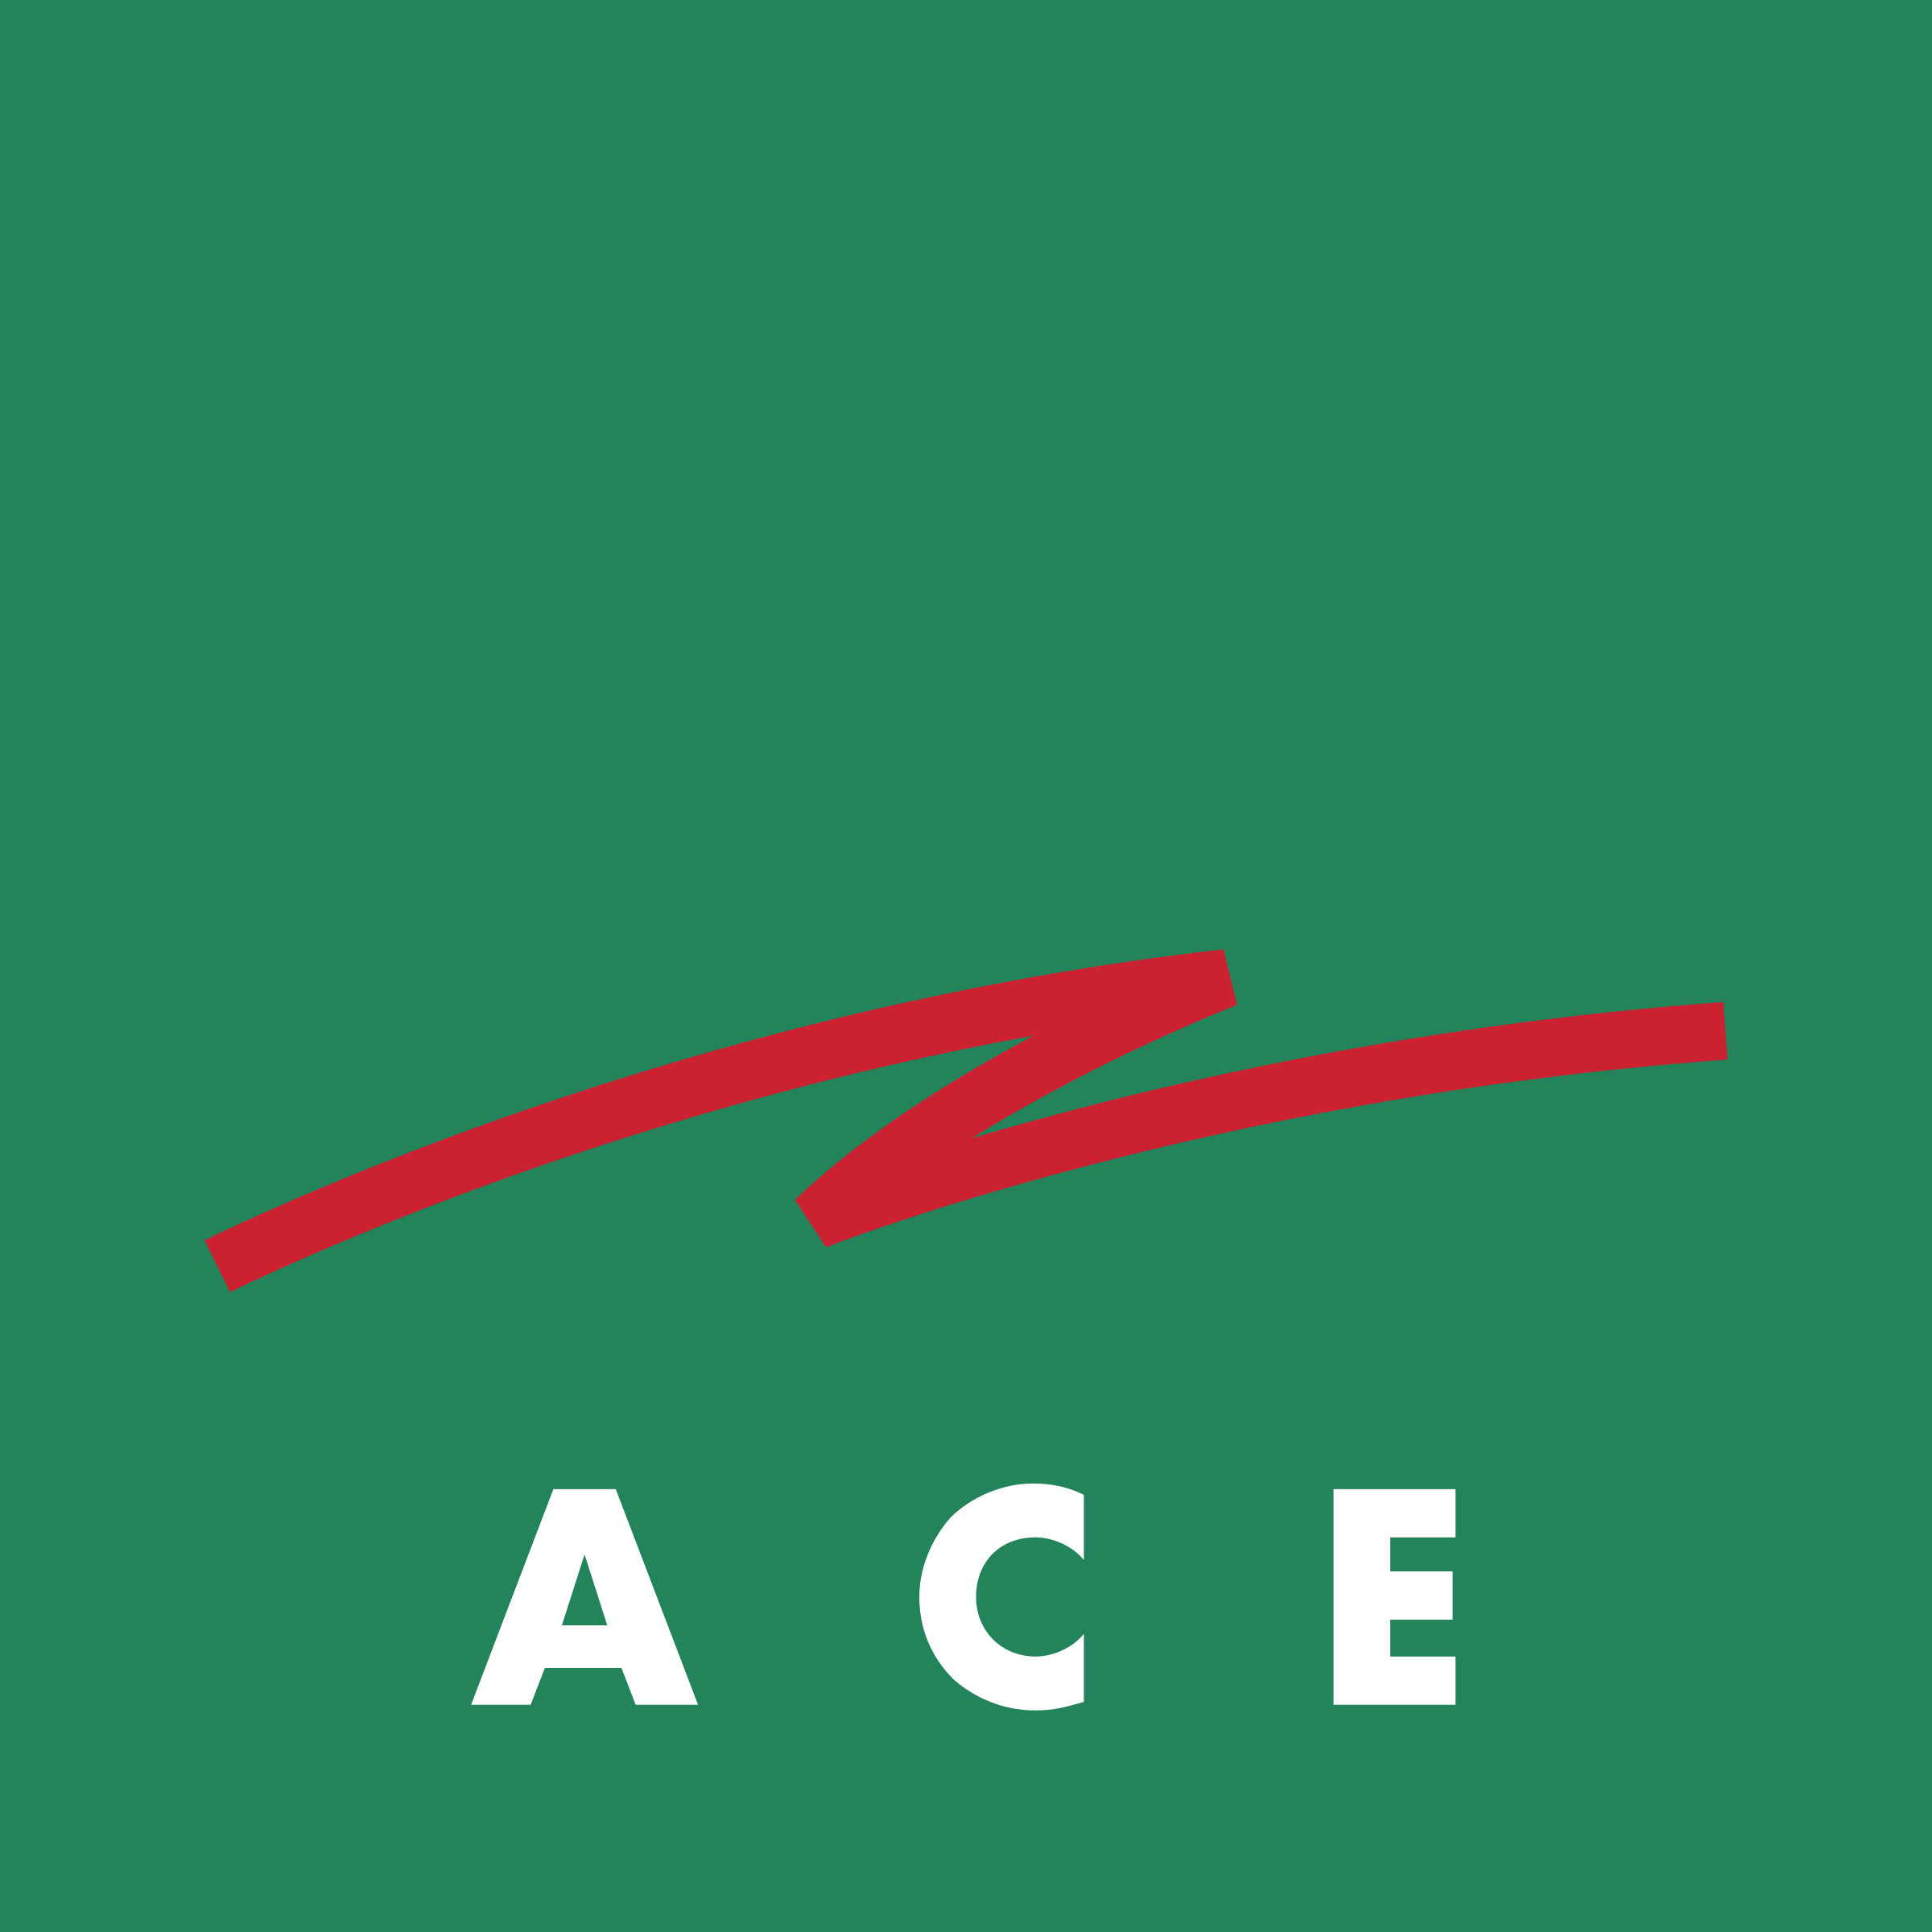 Cash Express Logo - ACE Cash Express Logo PNG Transparent & SVG Vector - Freebie Supply